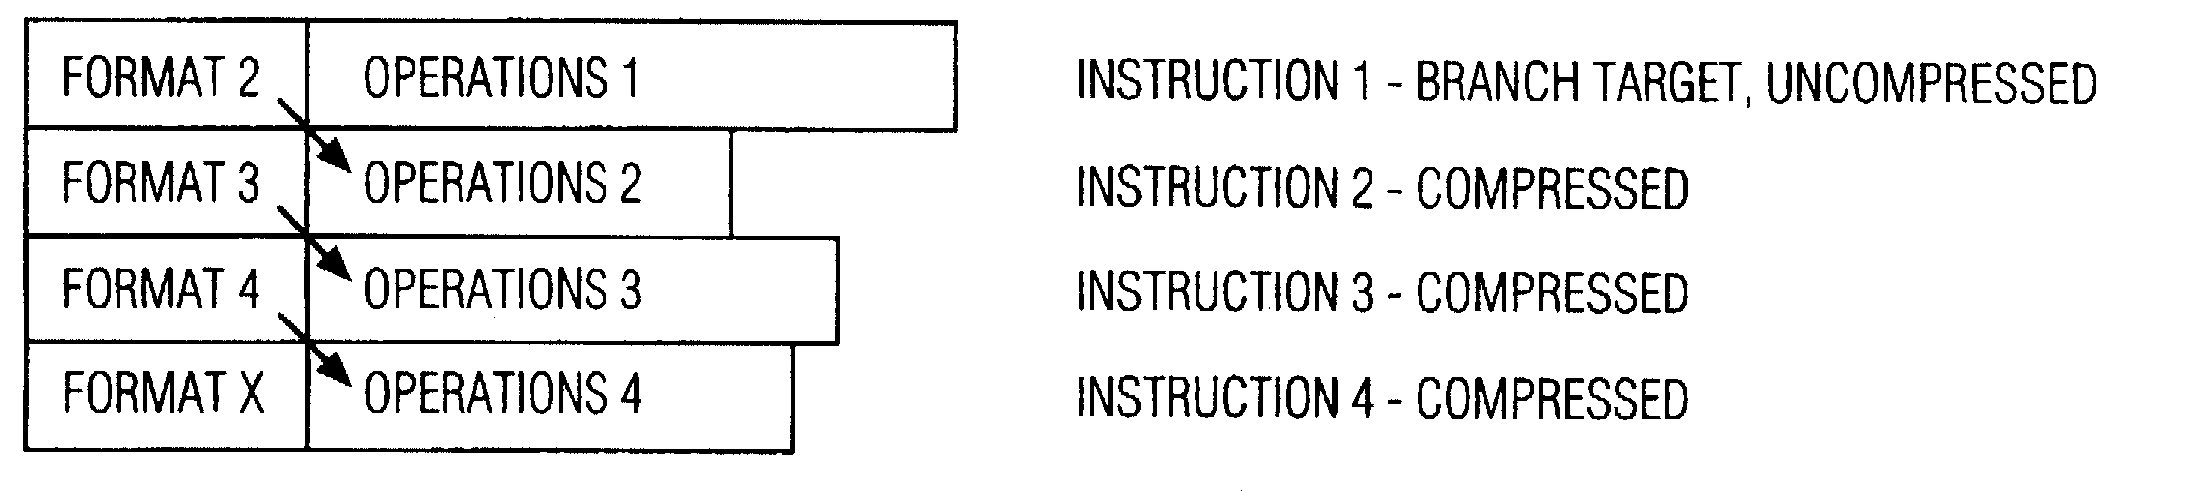 Instruction format